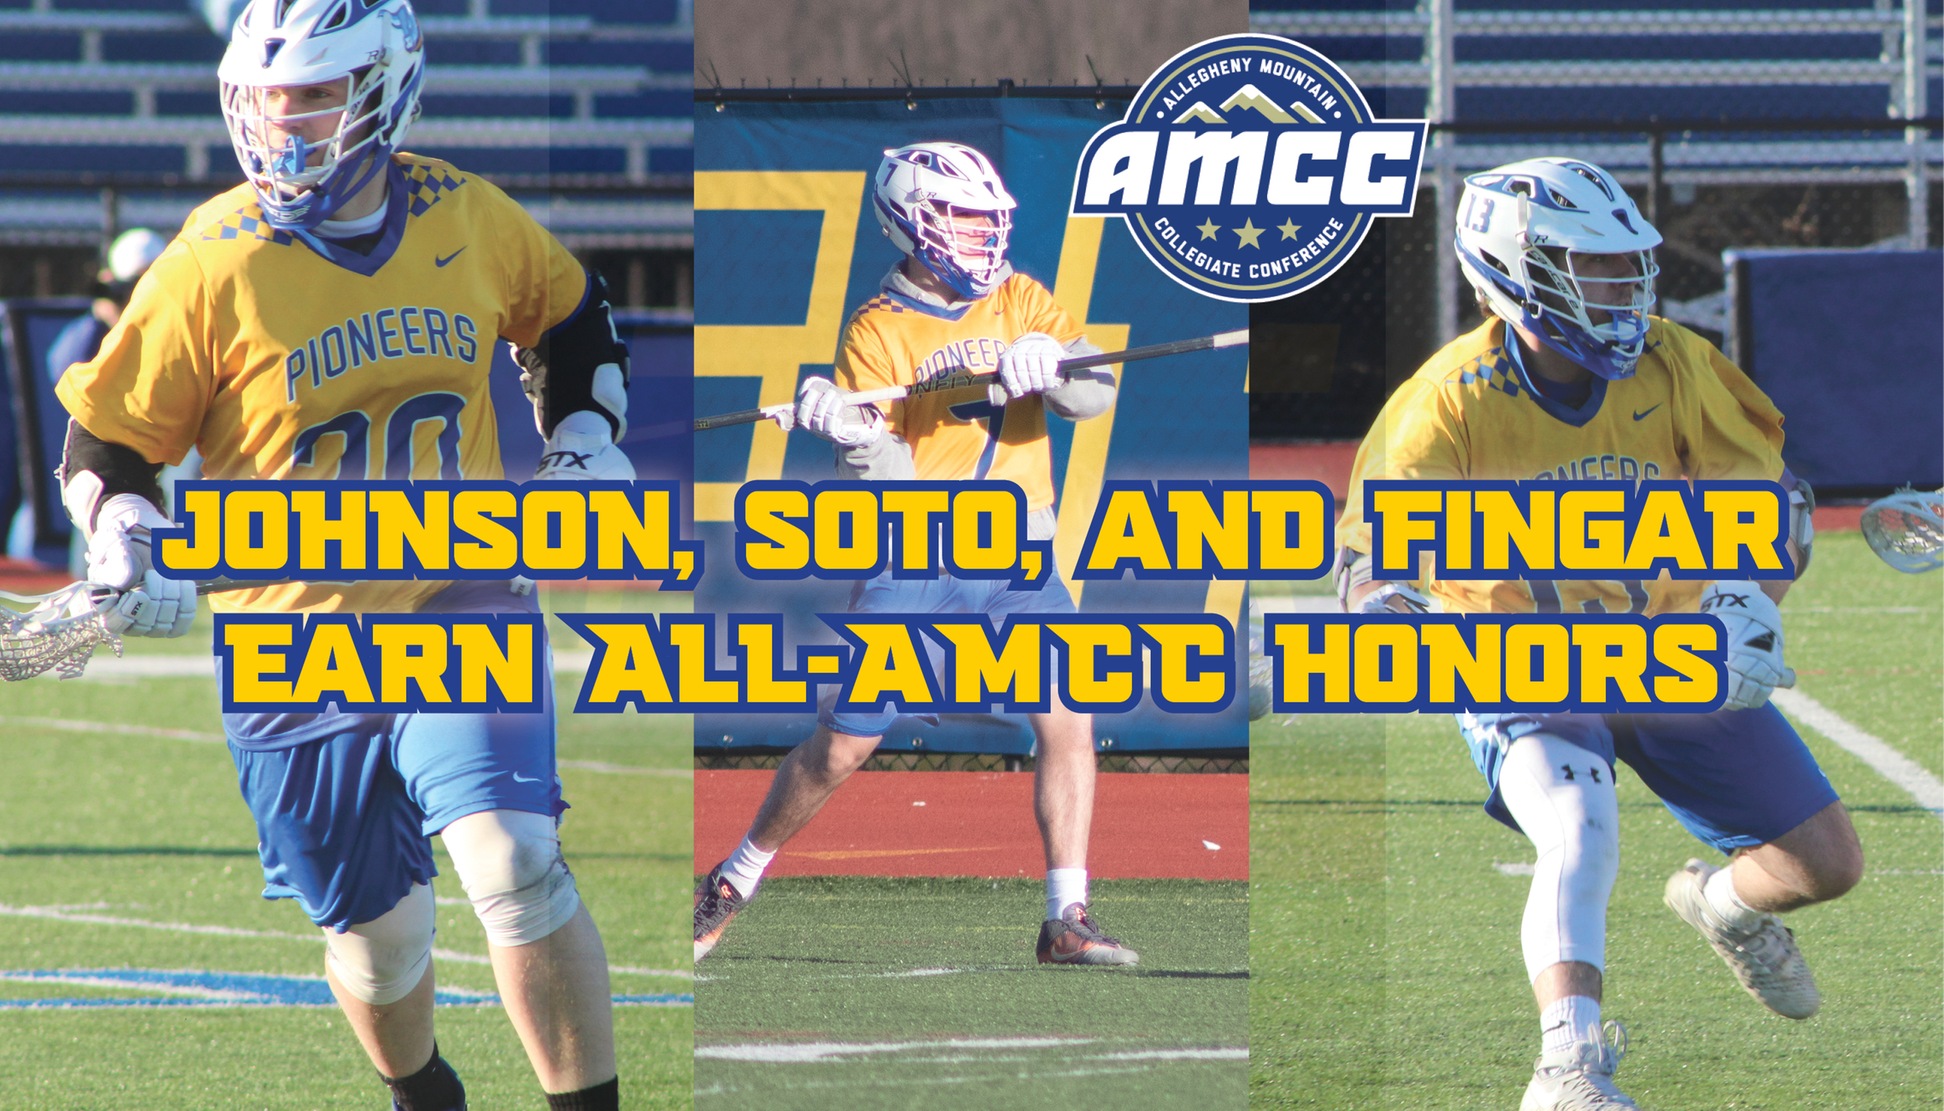 All-AMCC Lacrosse Selections - Joe Johnson, AJ Soto, and Scott Fingar